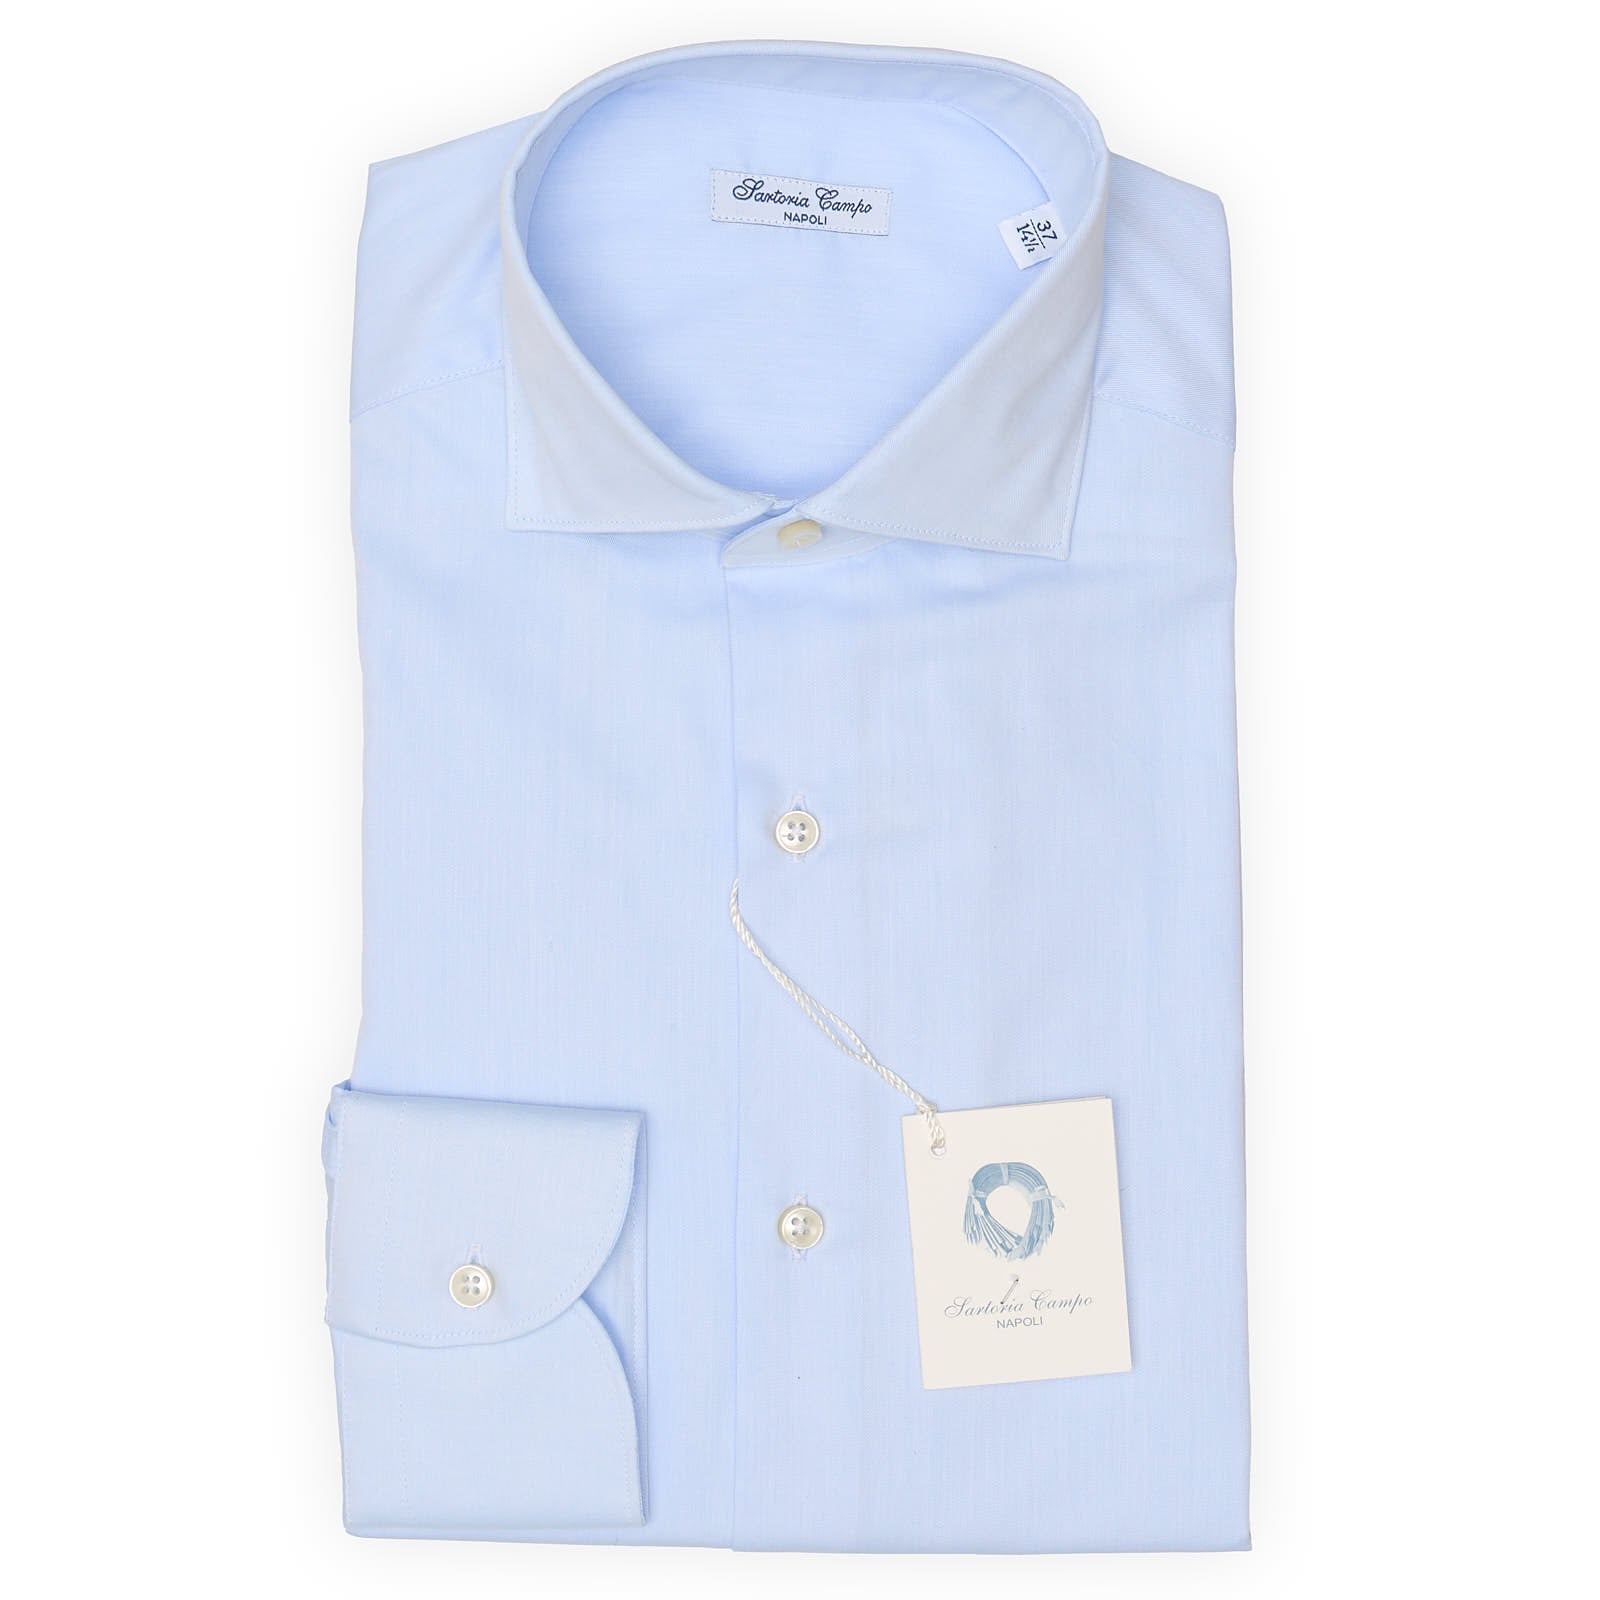 SARTORIA CAMPO Napoli Light Blue Broadcloth Cotton Dress Shirt NEW